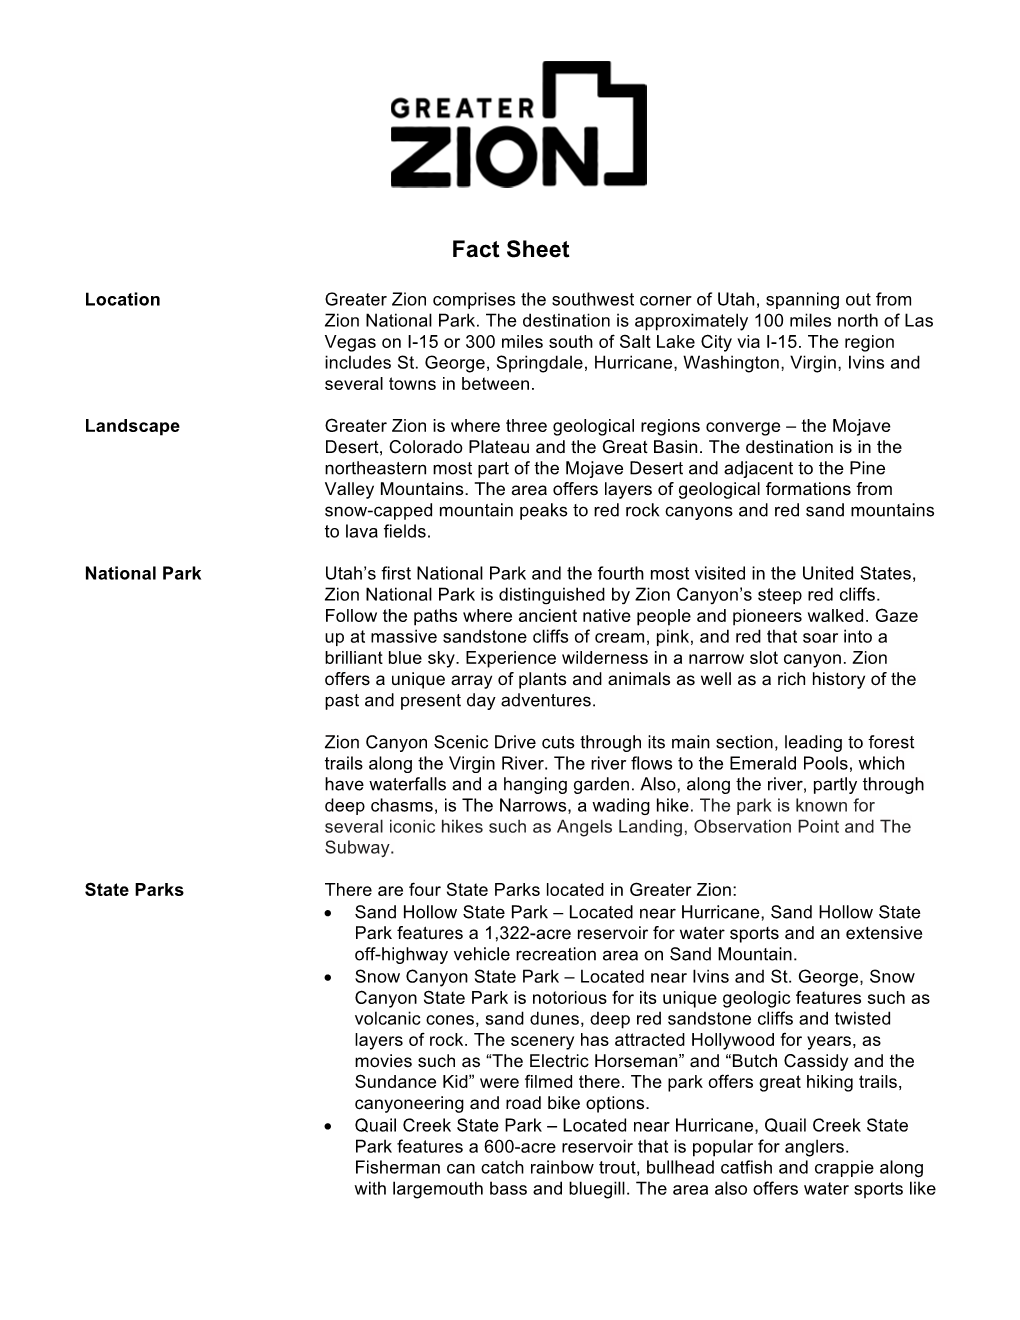 Greater Zion Fact Sheet